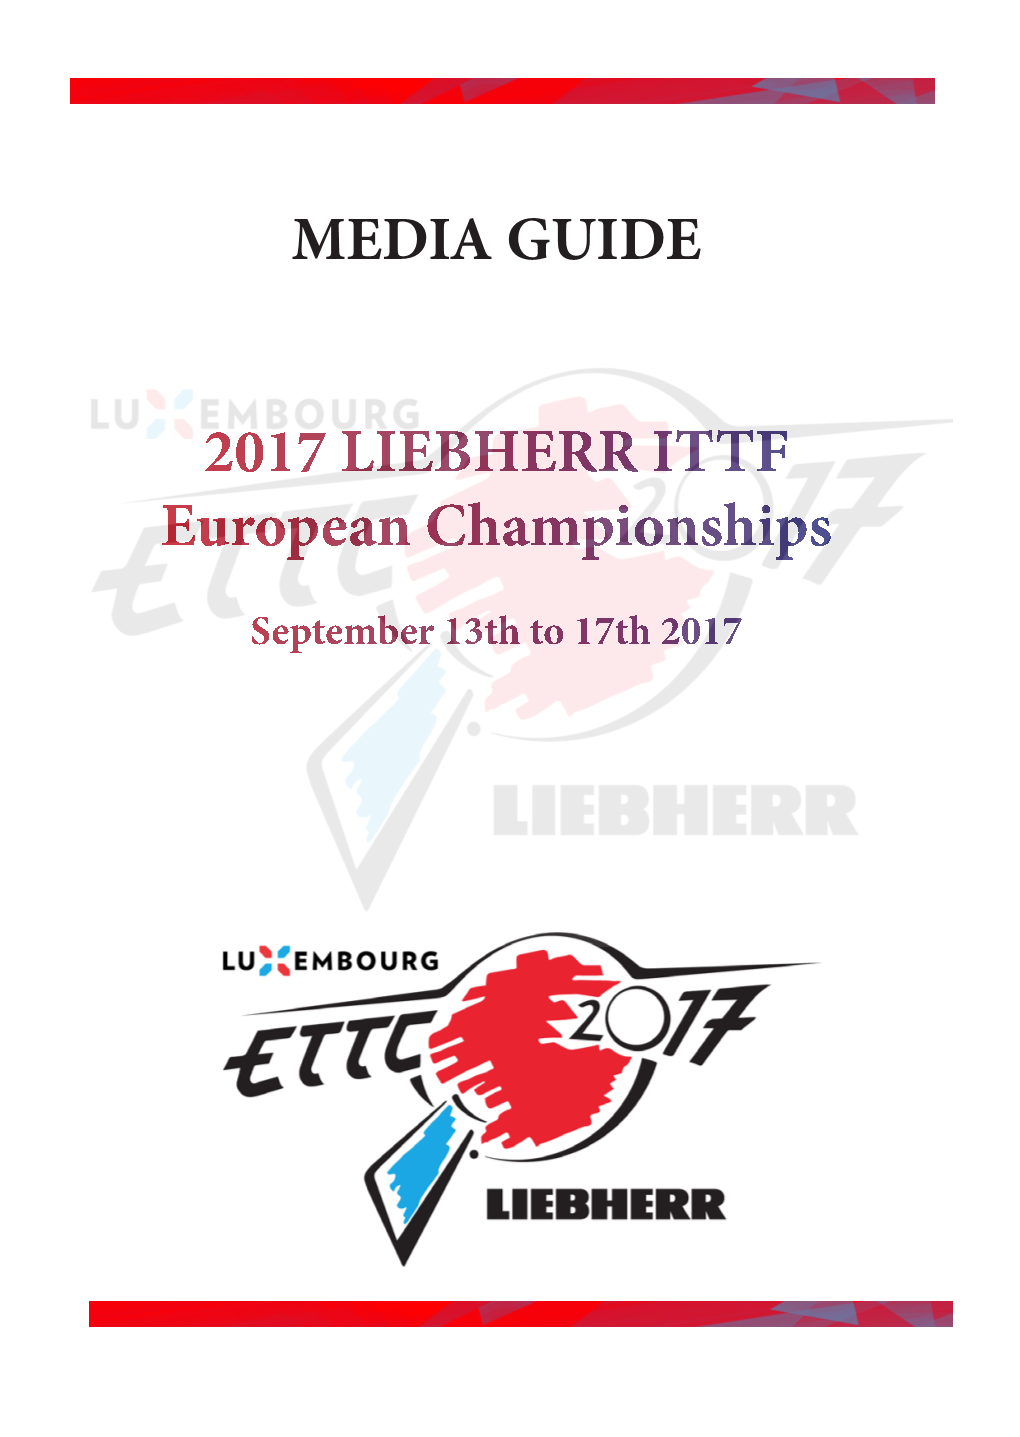 2017 LIEBHERR ITTF European Championships MEDIA GUIDE